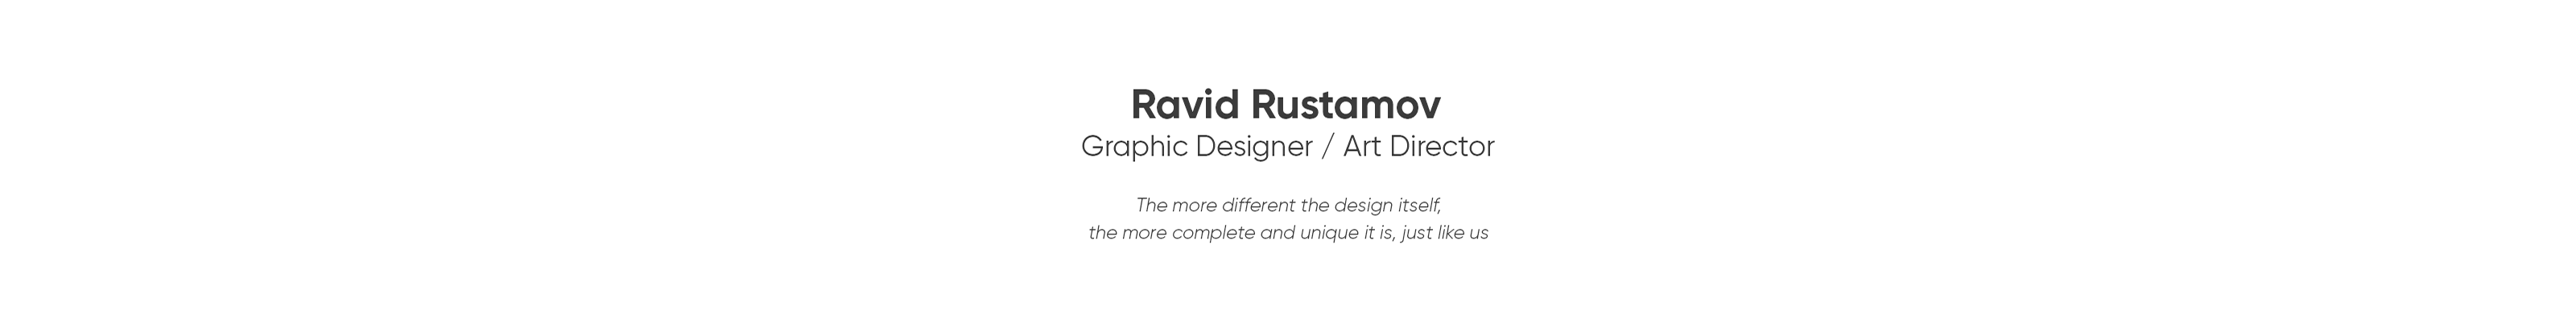 Ravid Rustamovs profilbanner